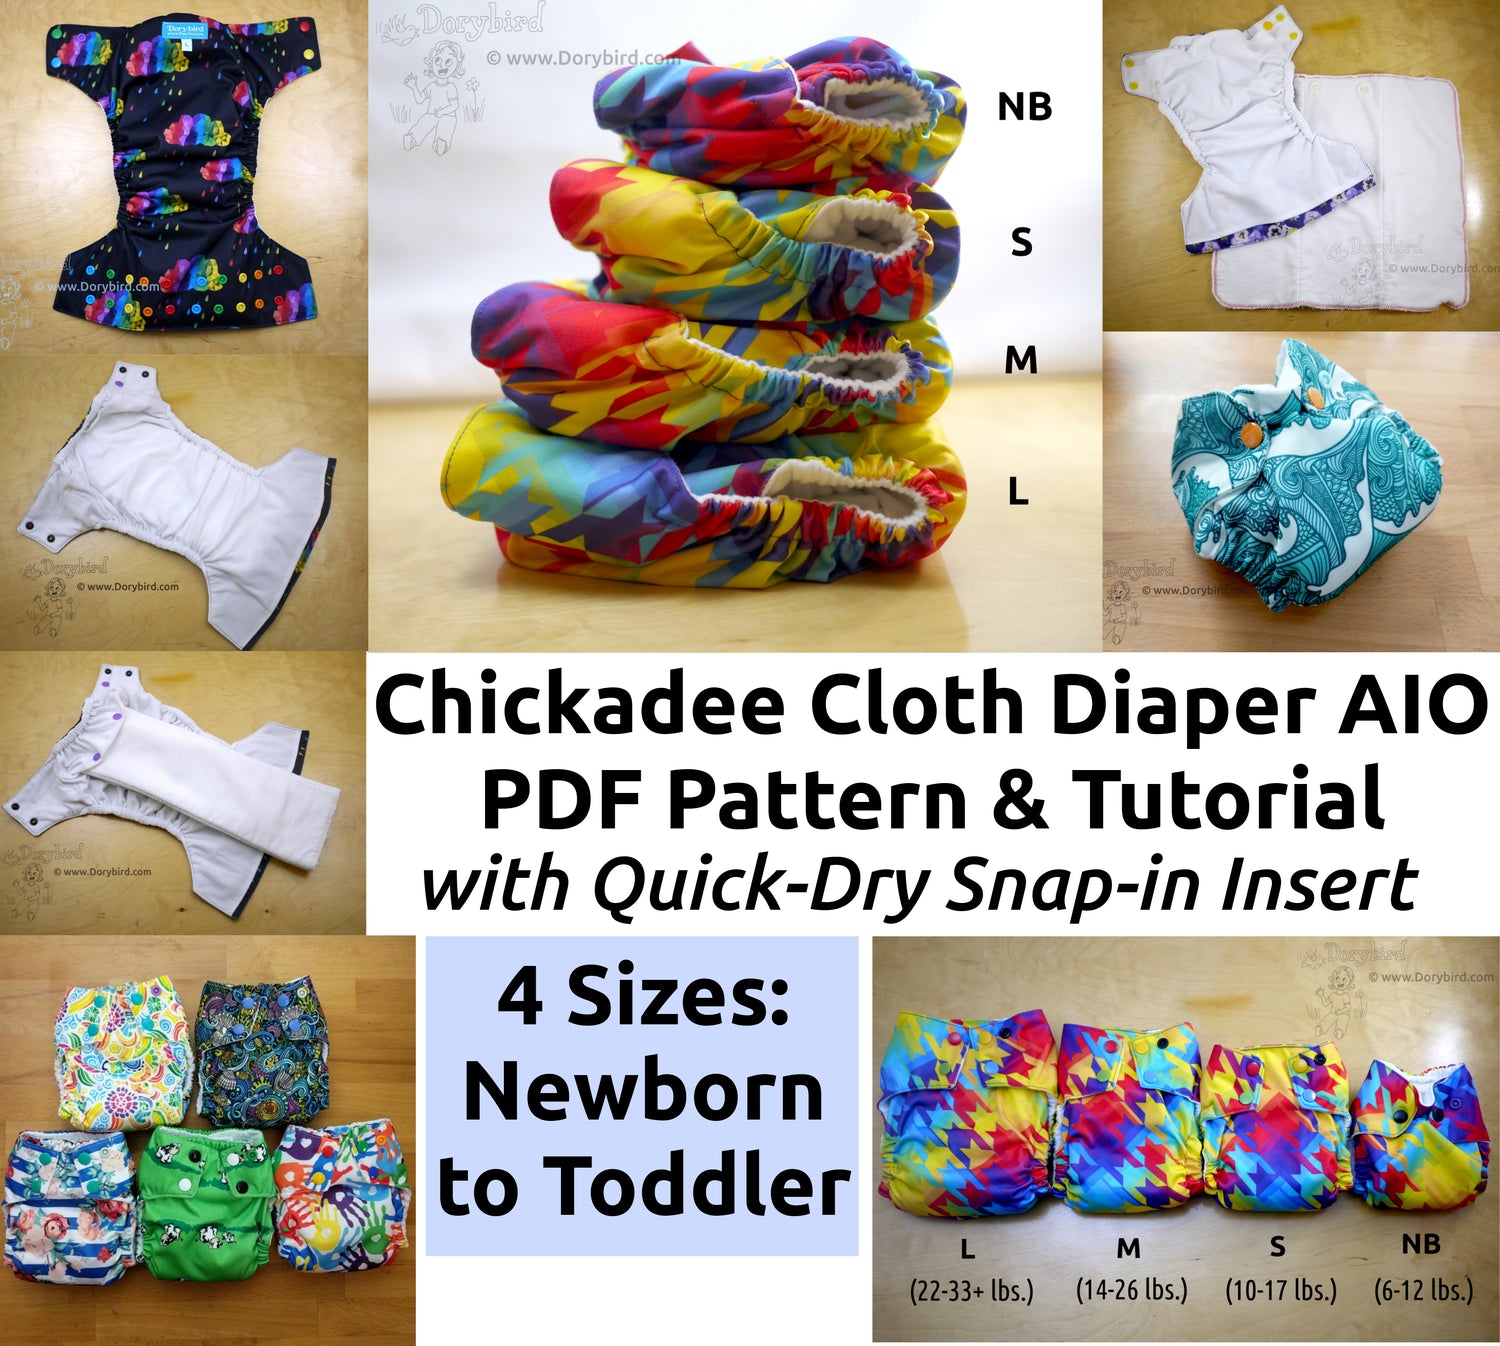 Dorybird Chickadee Cloth Diaper Pattern Tutorial, 4 sizes Newborn Small Medium Large from baby to toddler